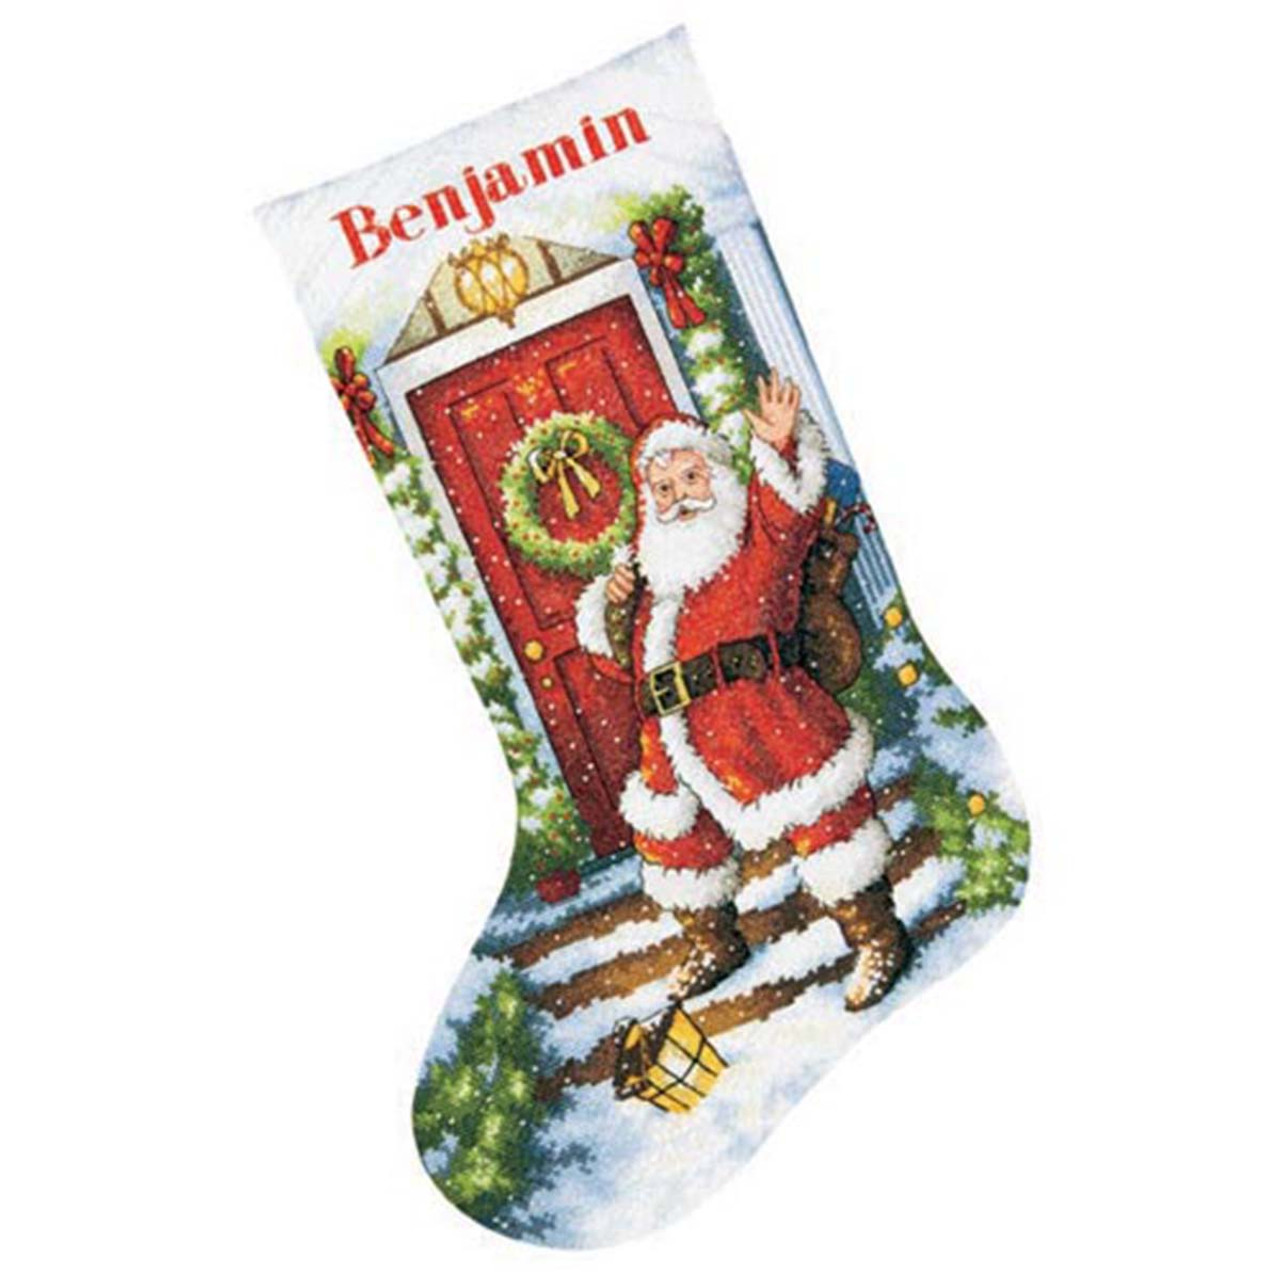 Christmas Stocking Cross Stitch Kit Santa Claus Father Saint